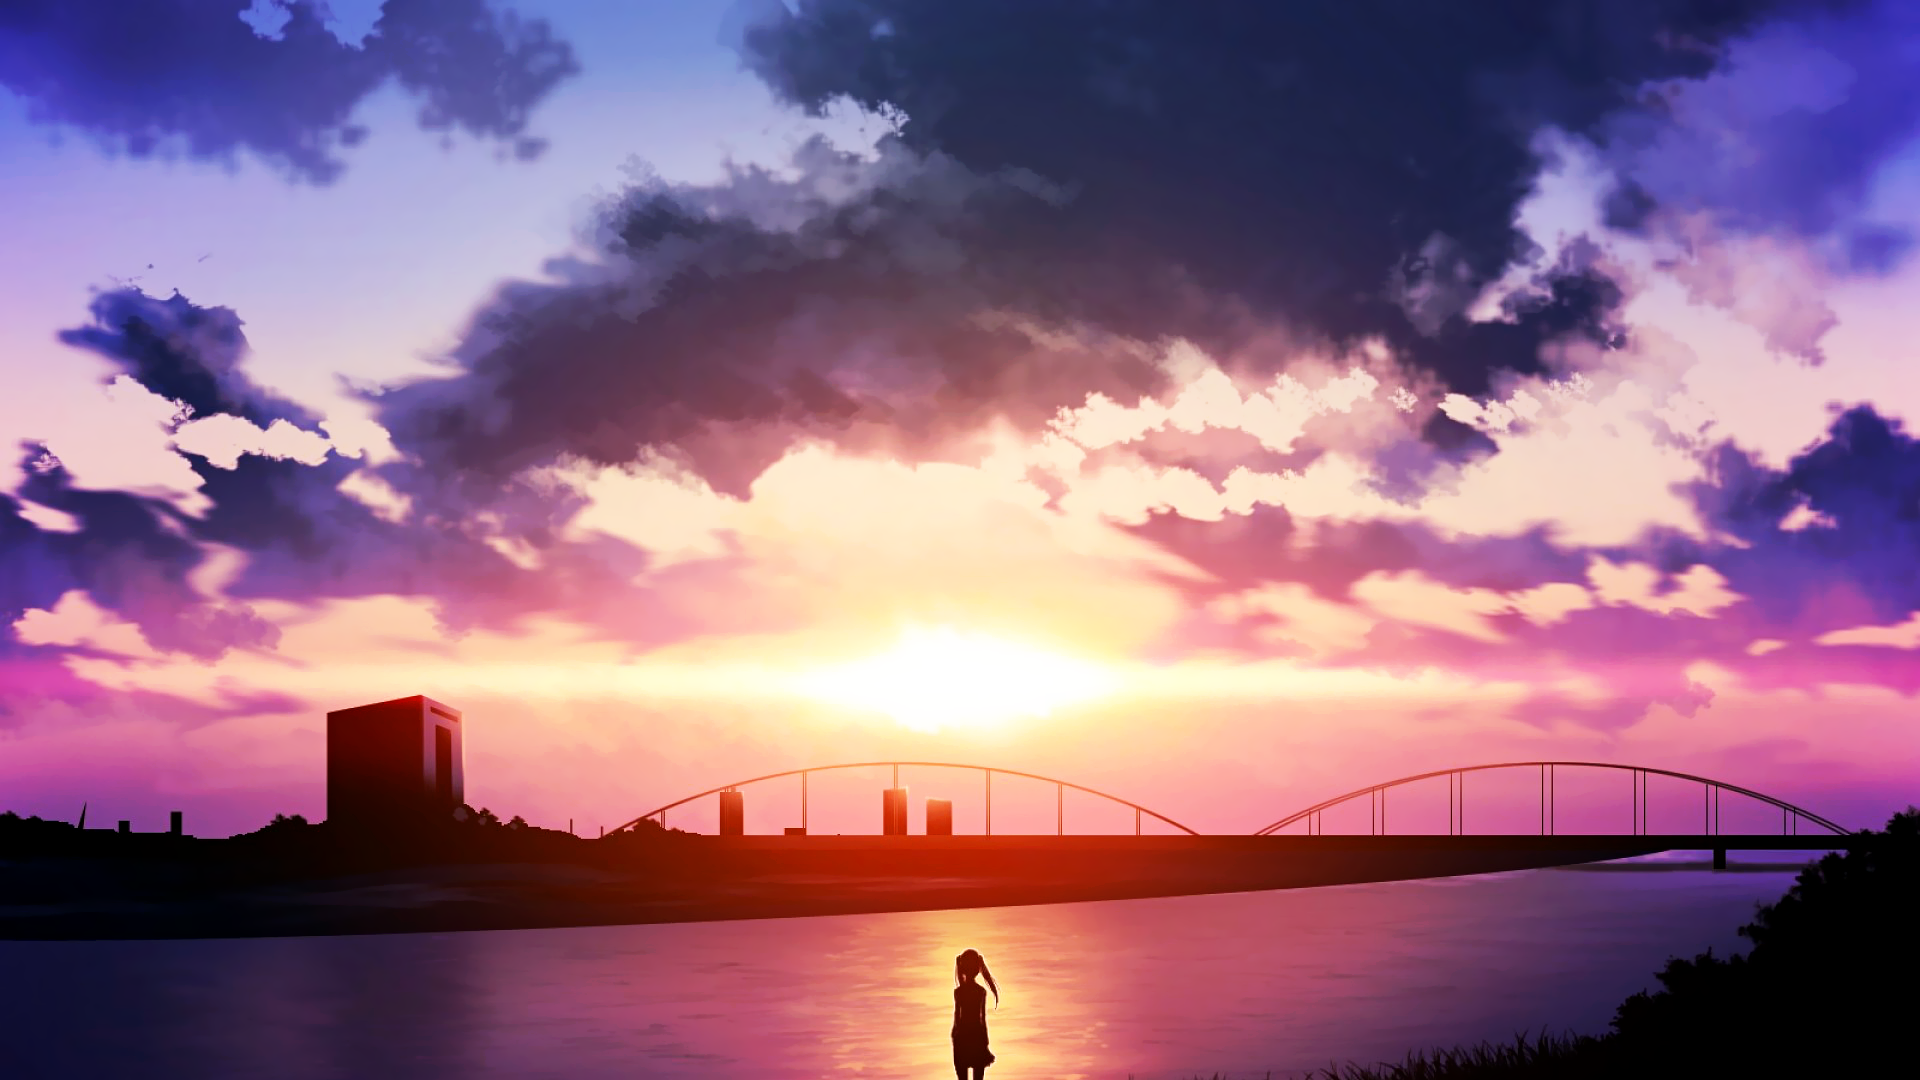 Anime 1920x1080 anime sunset river sky clouds anime girls women women outdoors standing